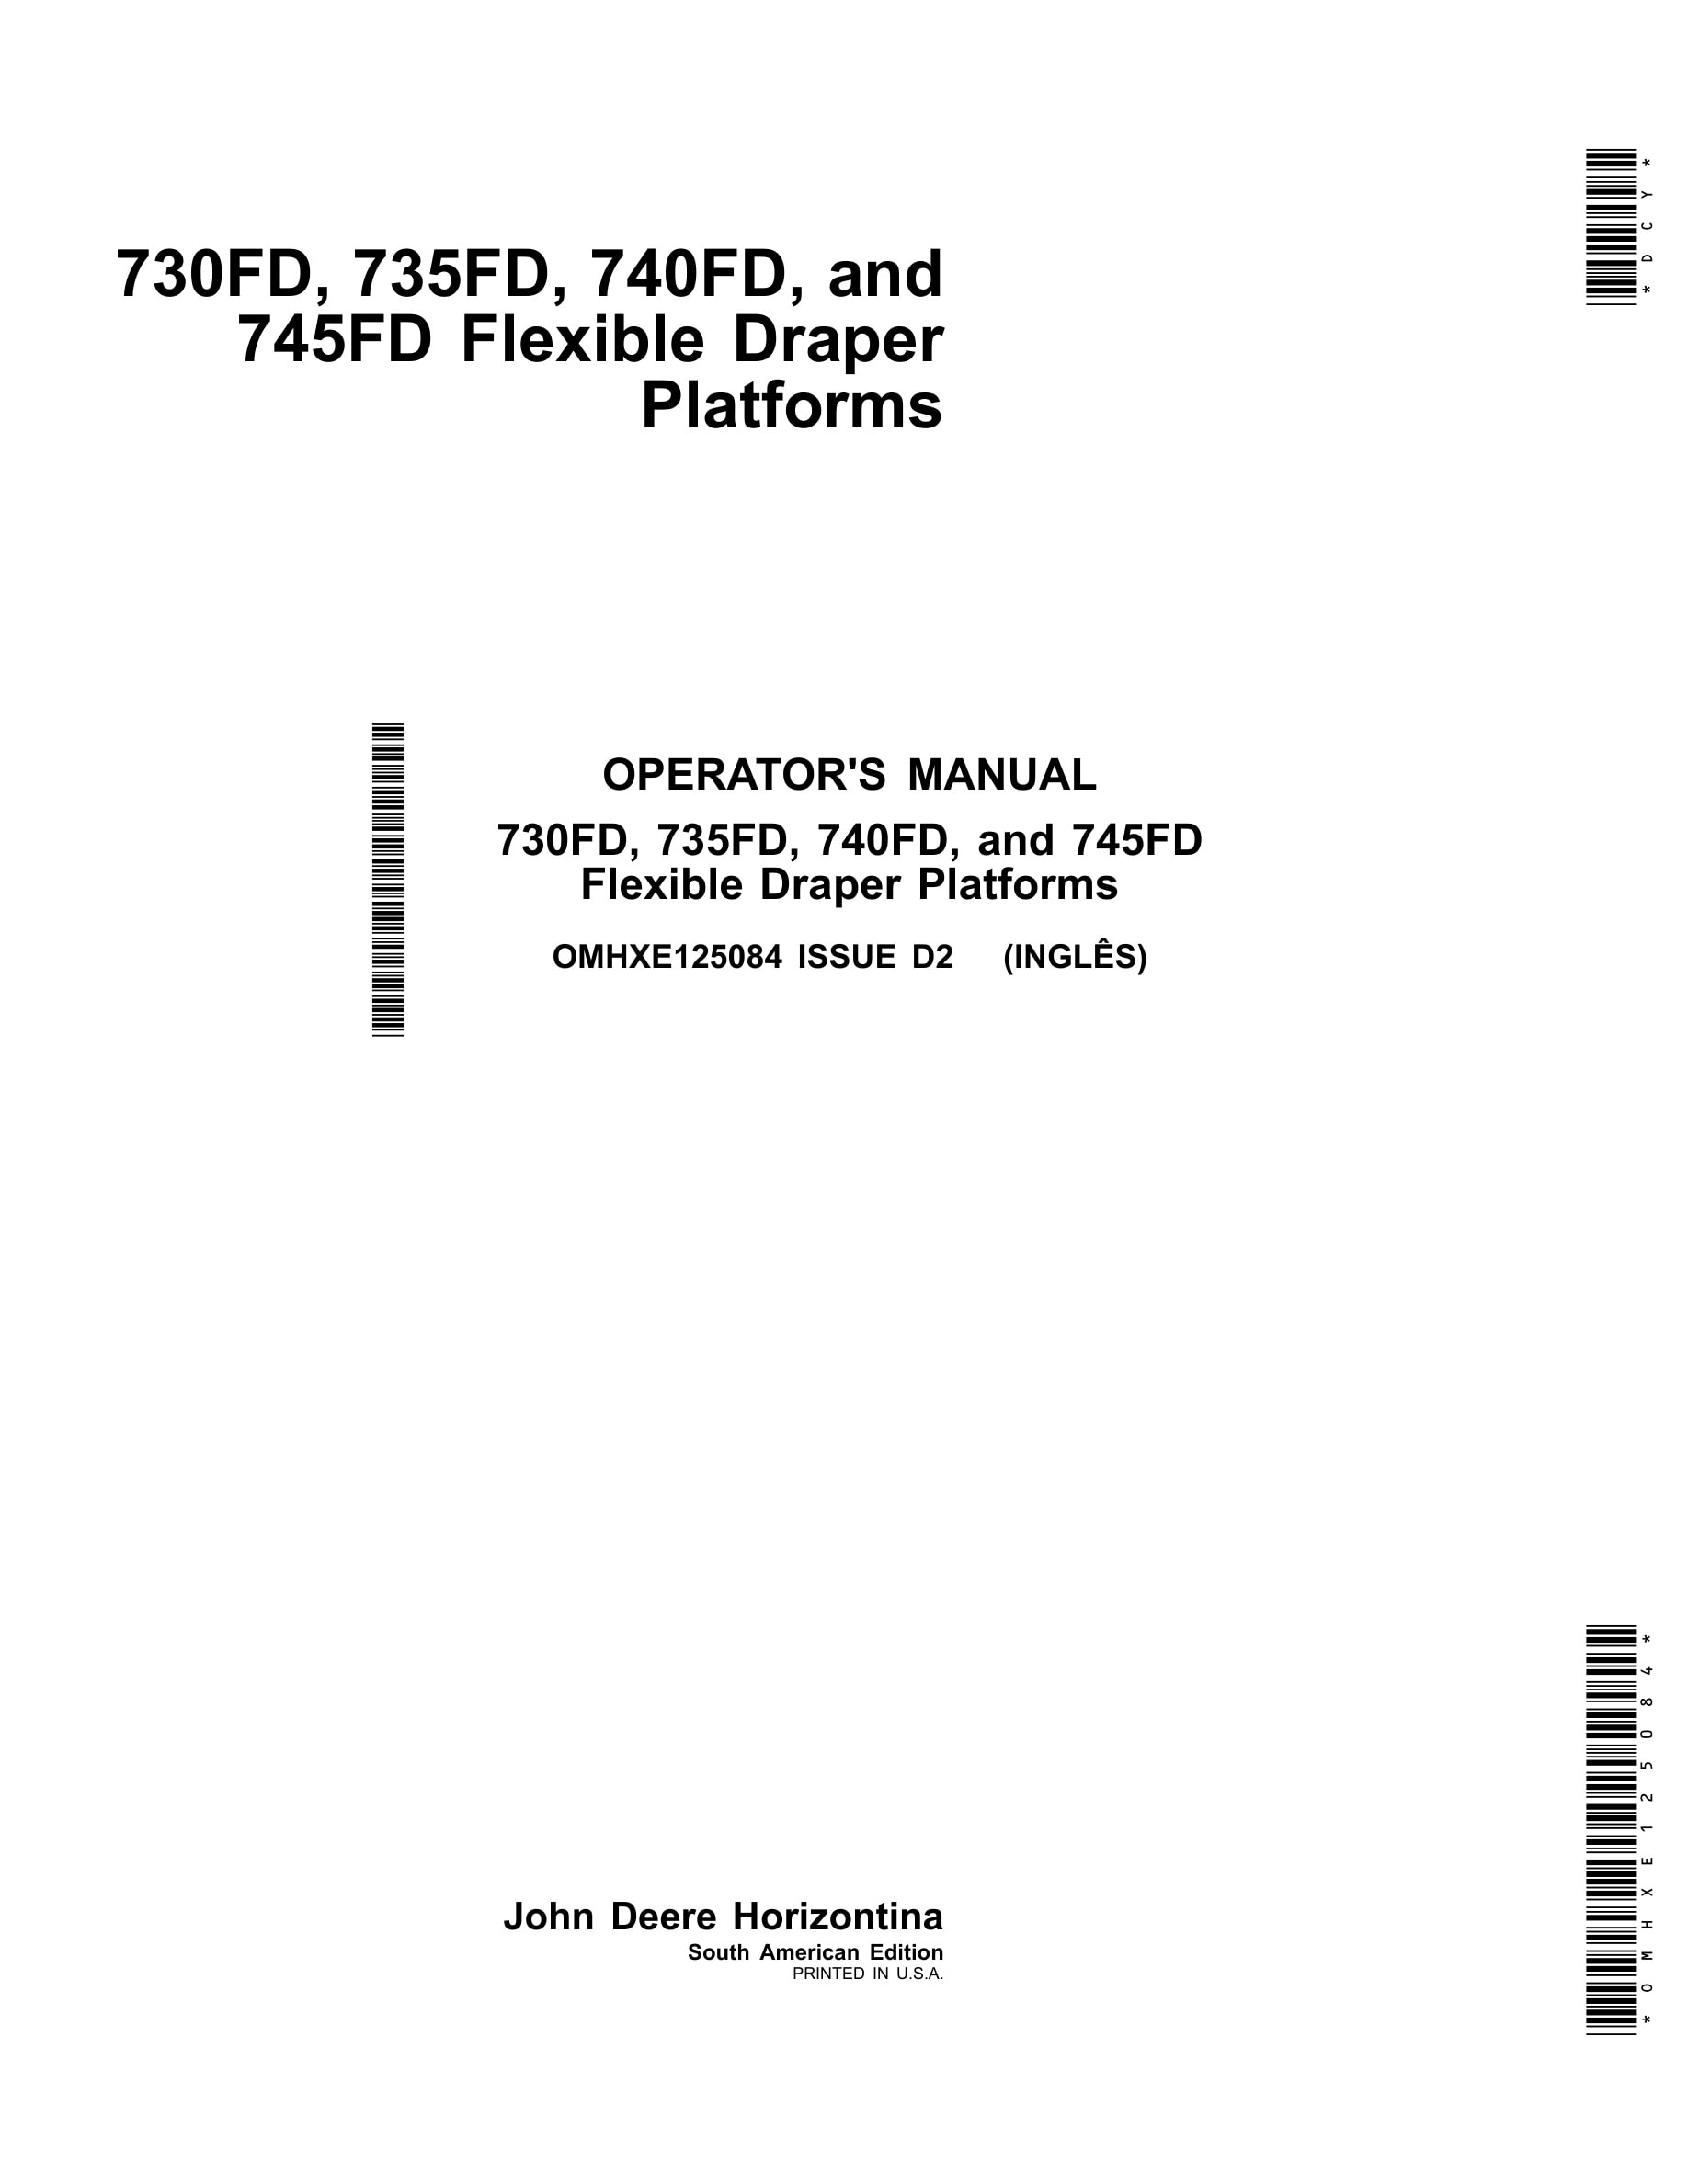 John Deere 730FD, 735FD, 740FD, and 745FD Flexible Draper Platforms Operator Manual OMHXE125084-1